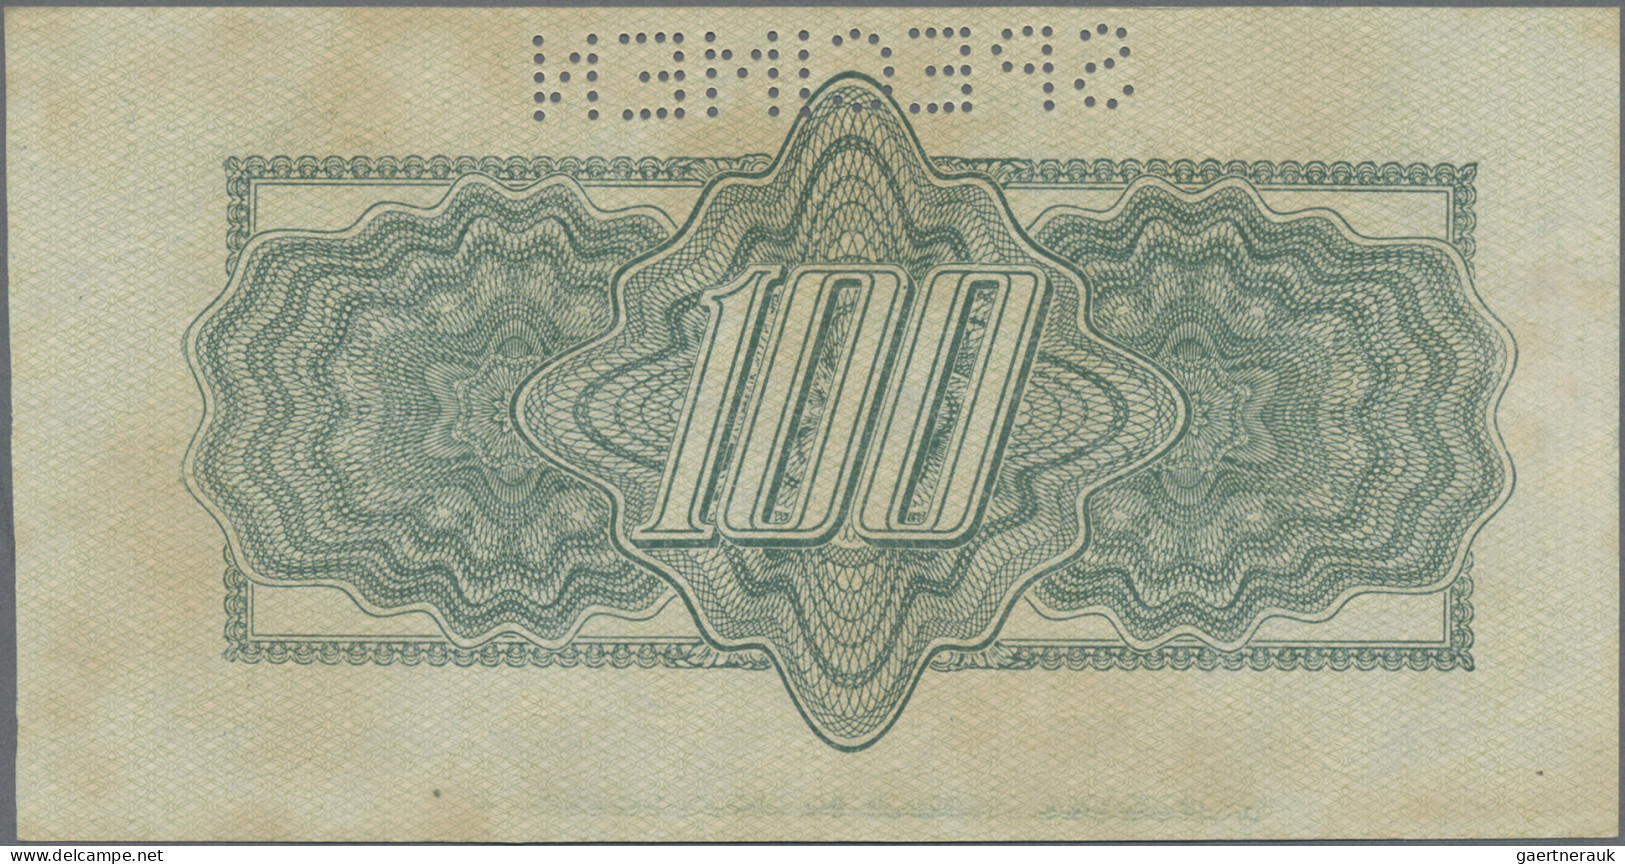 Czechoslovakia: Republika Československá, lot with 7 banknotes, 1944-1945 series